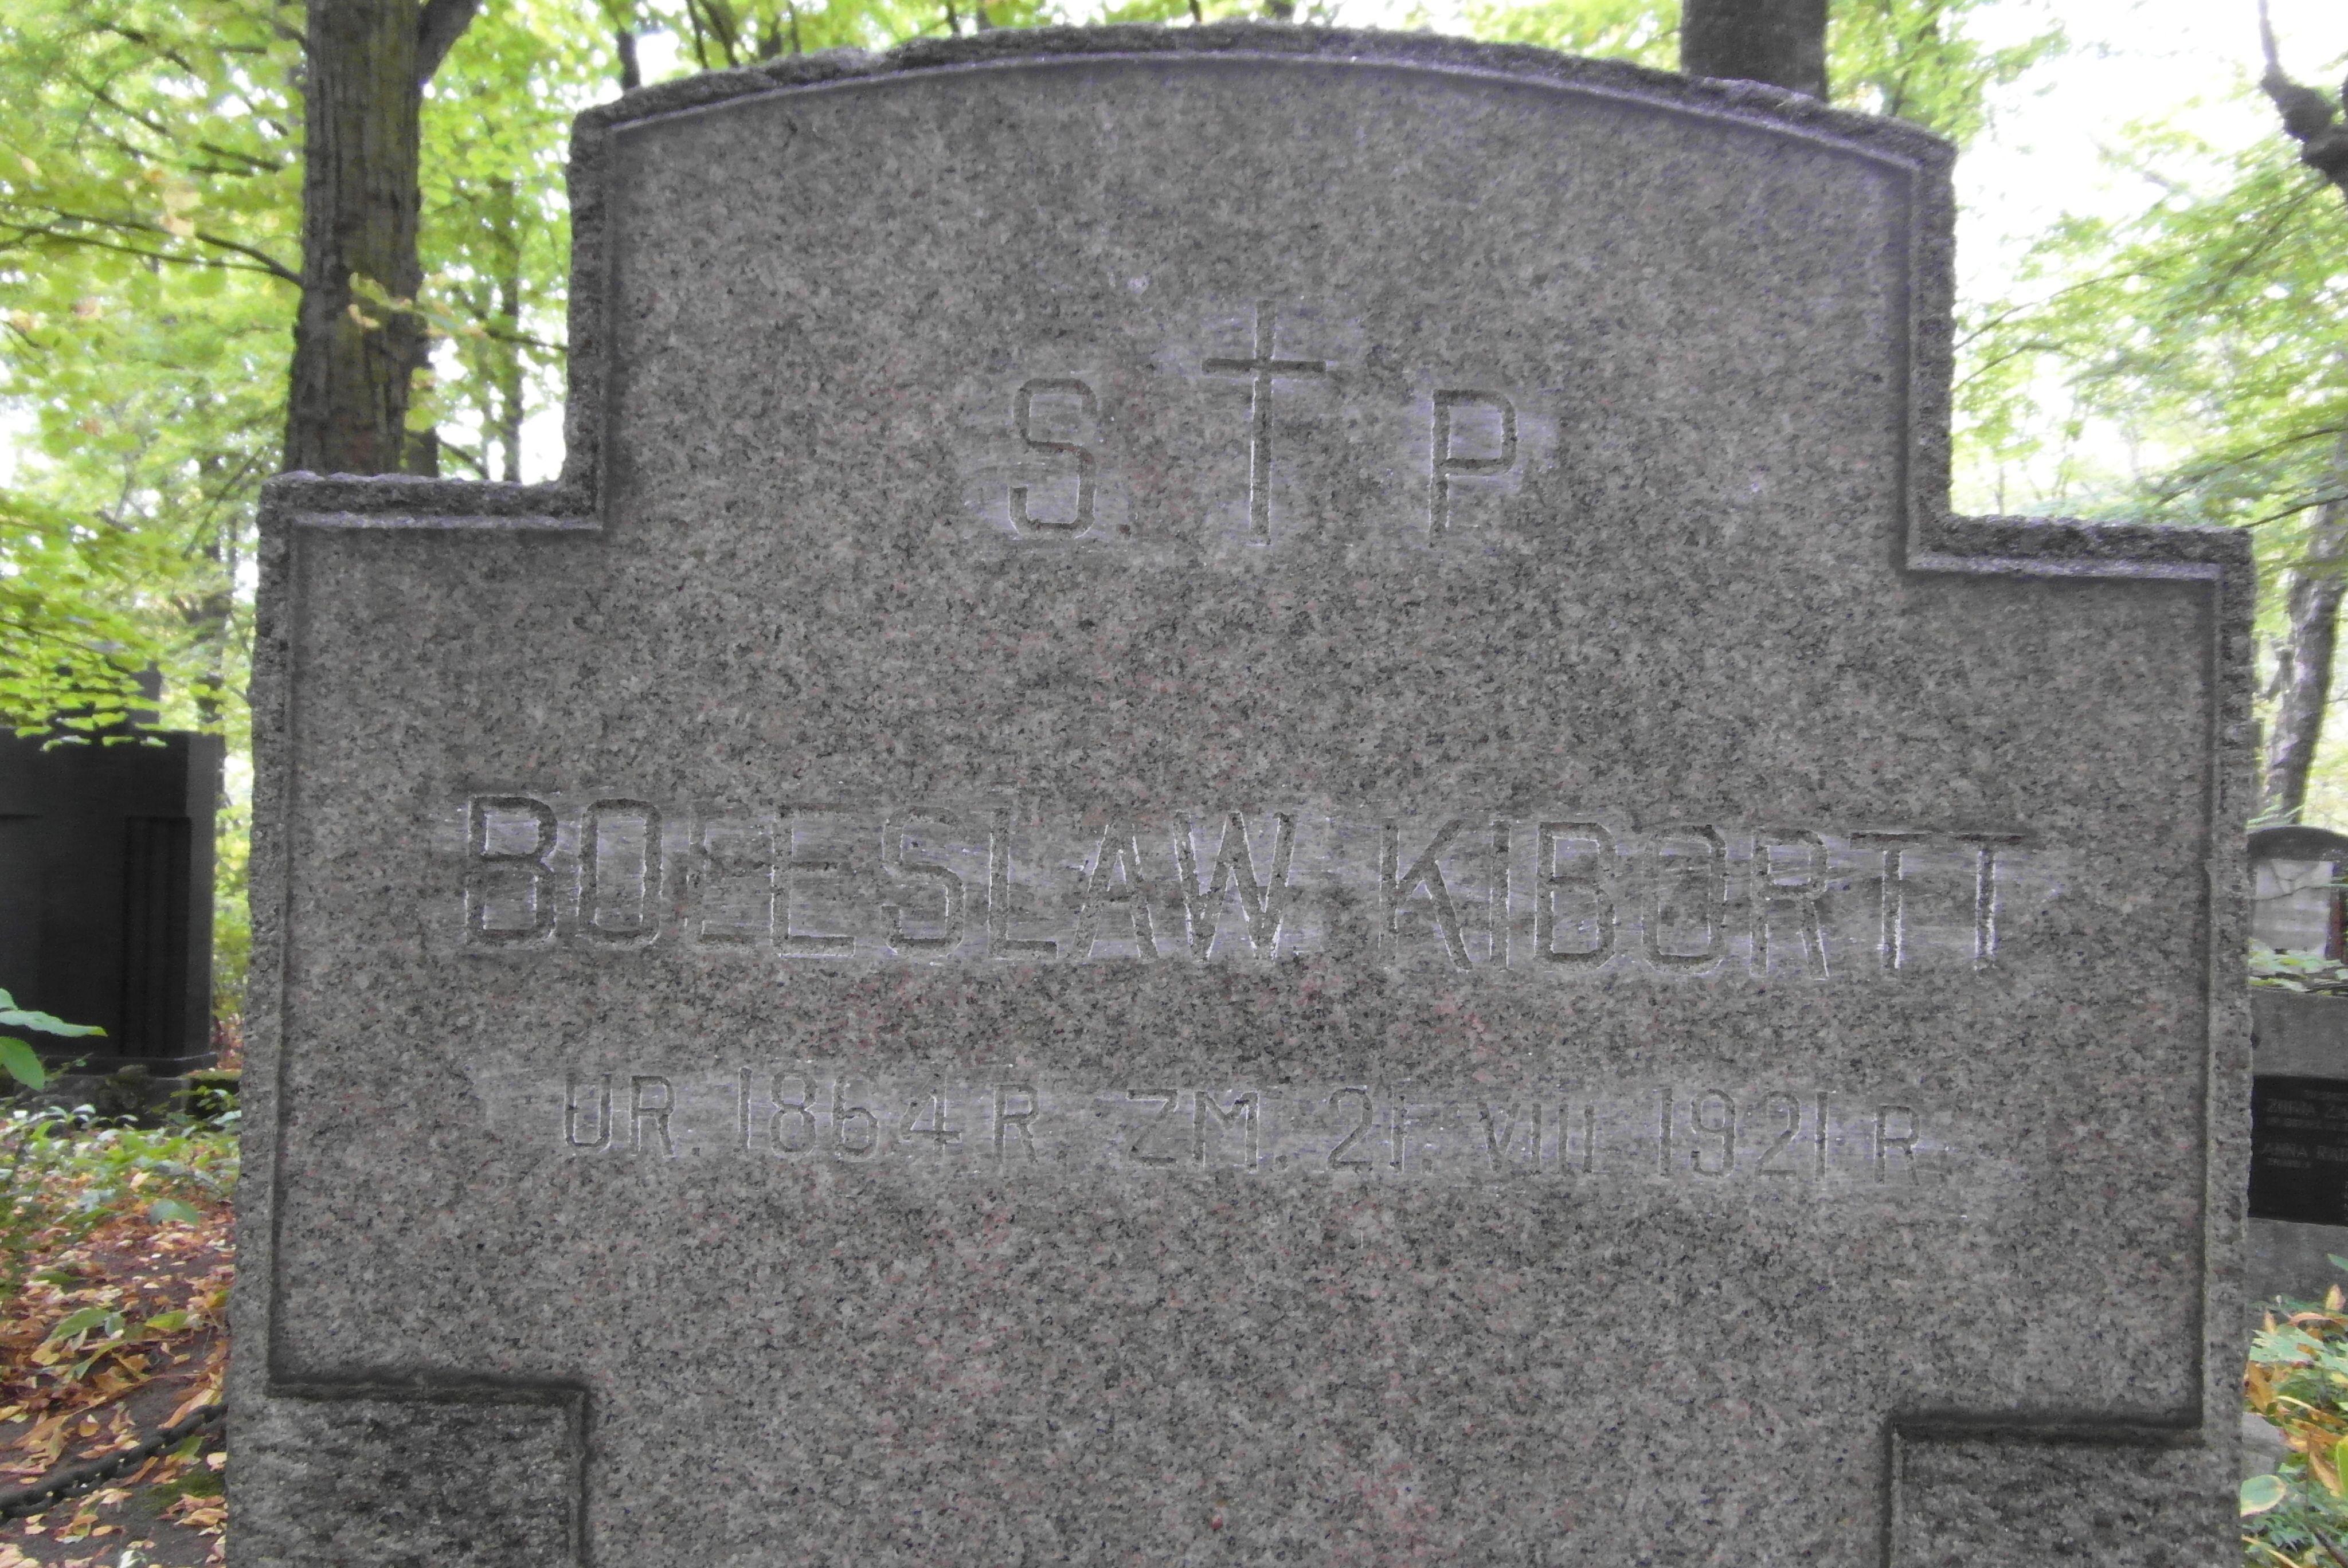 Inscription from the tombstone of Boleslaw Kibortt, St Michael's cemetery in Riga, as of 2021.